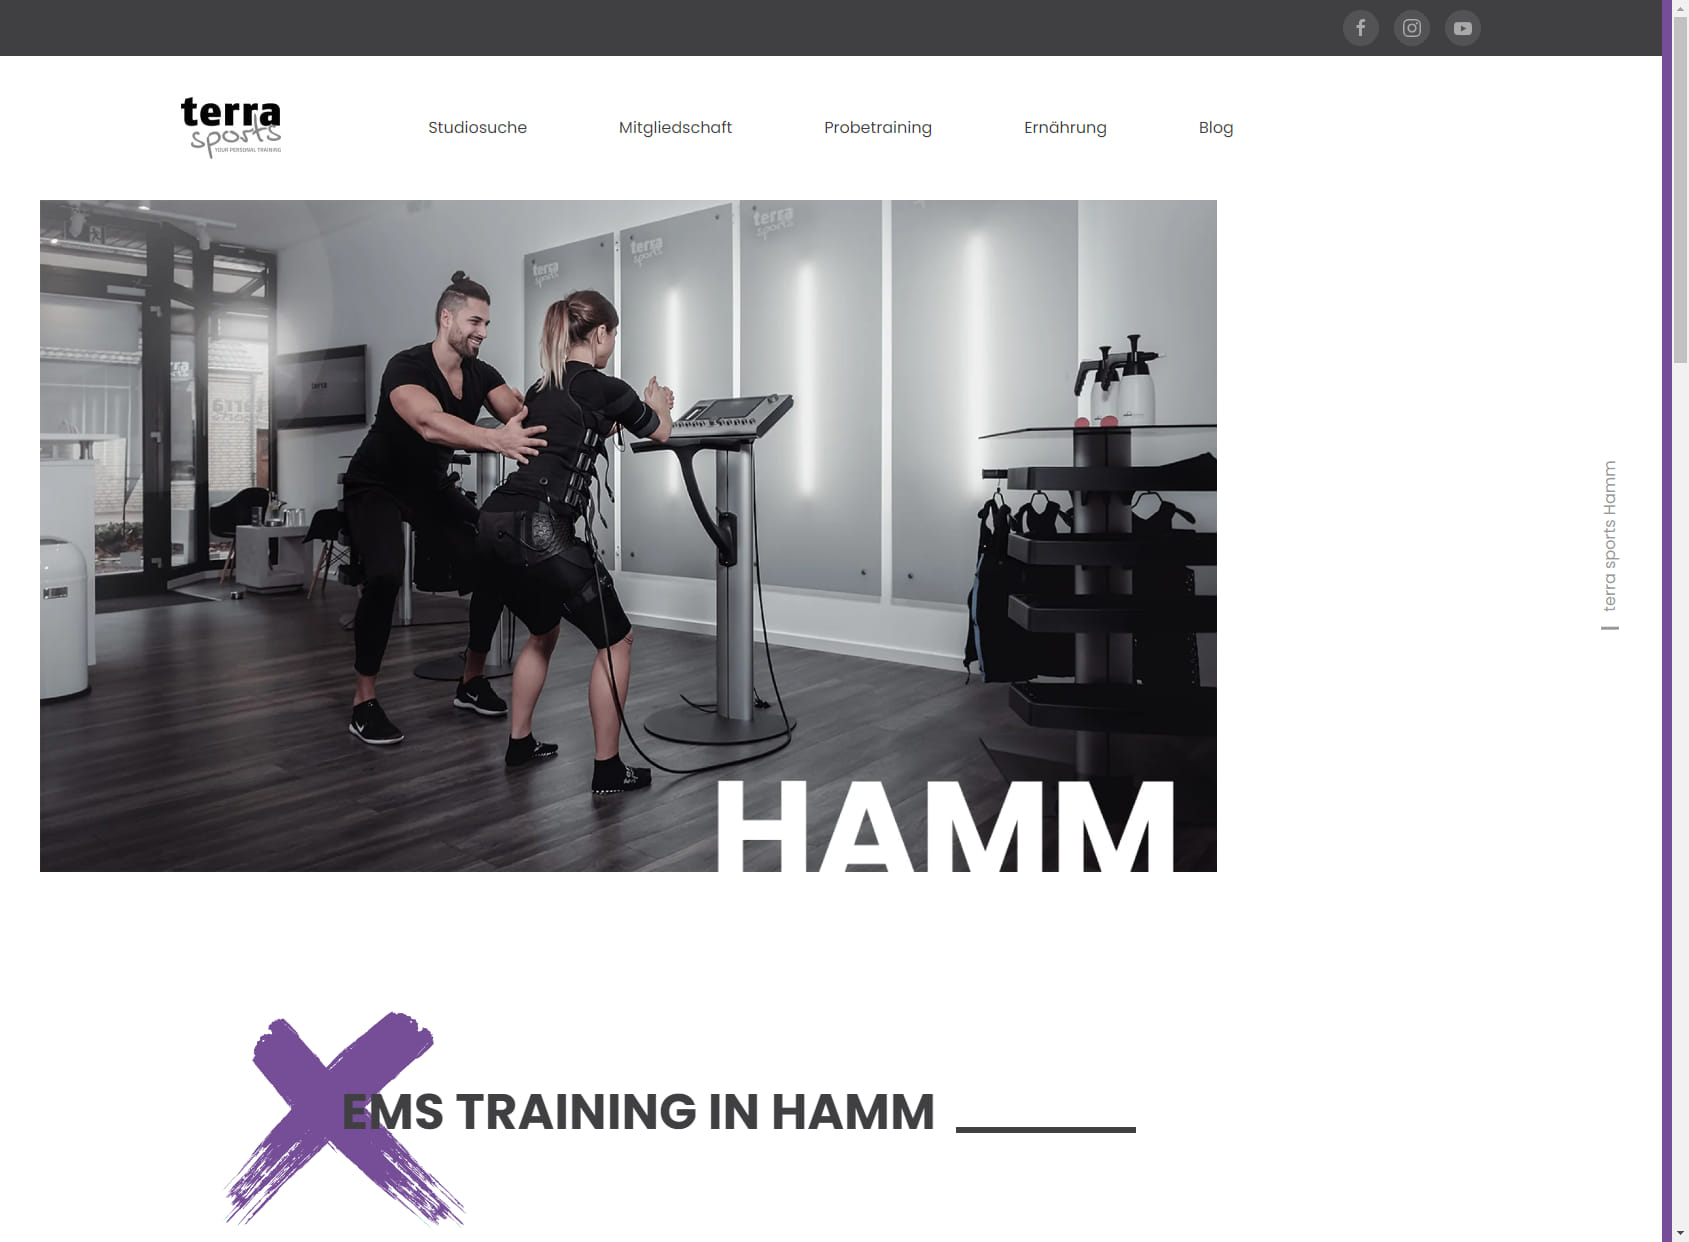 terra sports Hamm - EMS Training